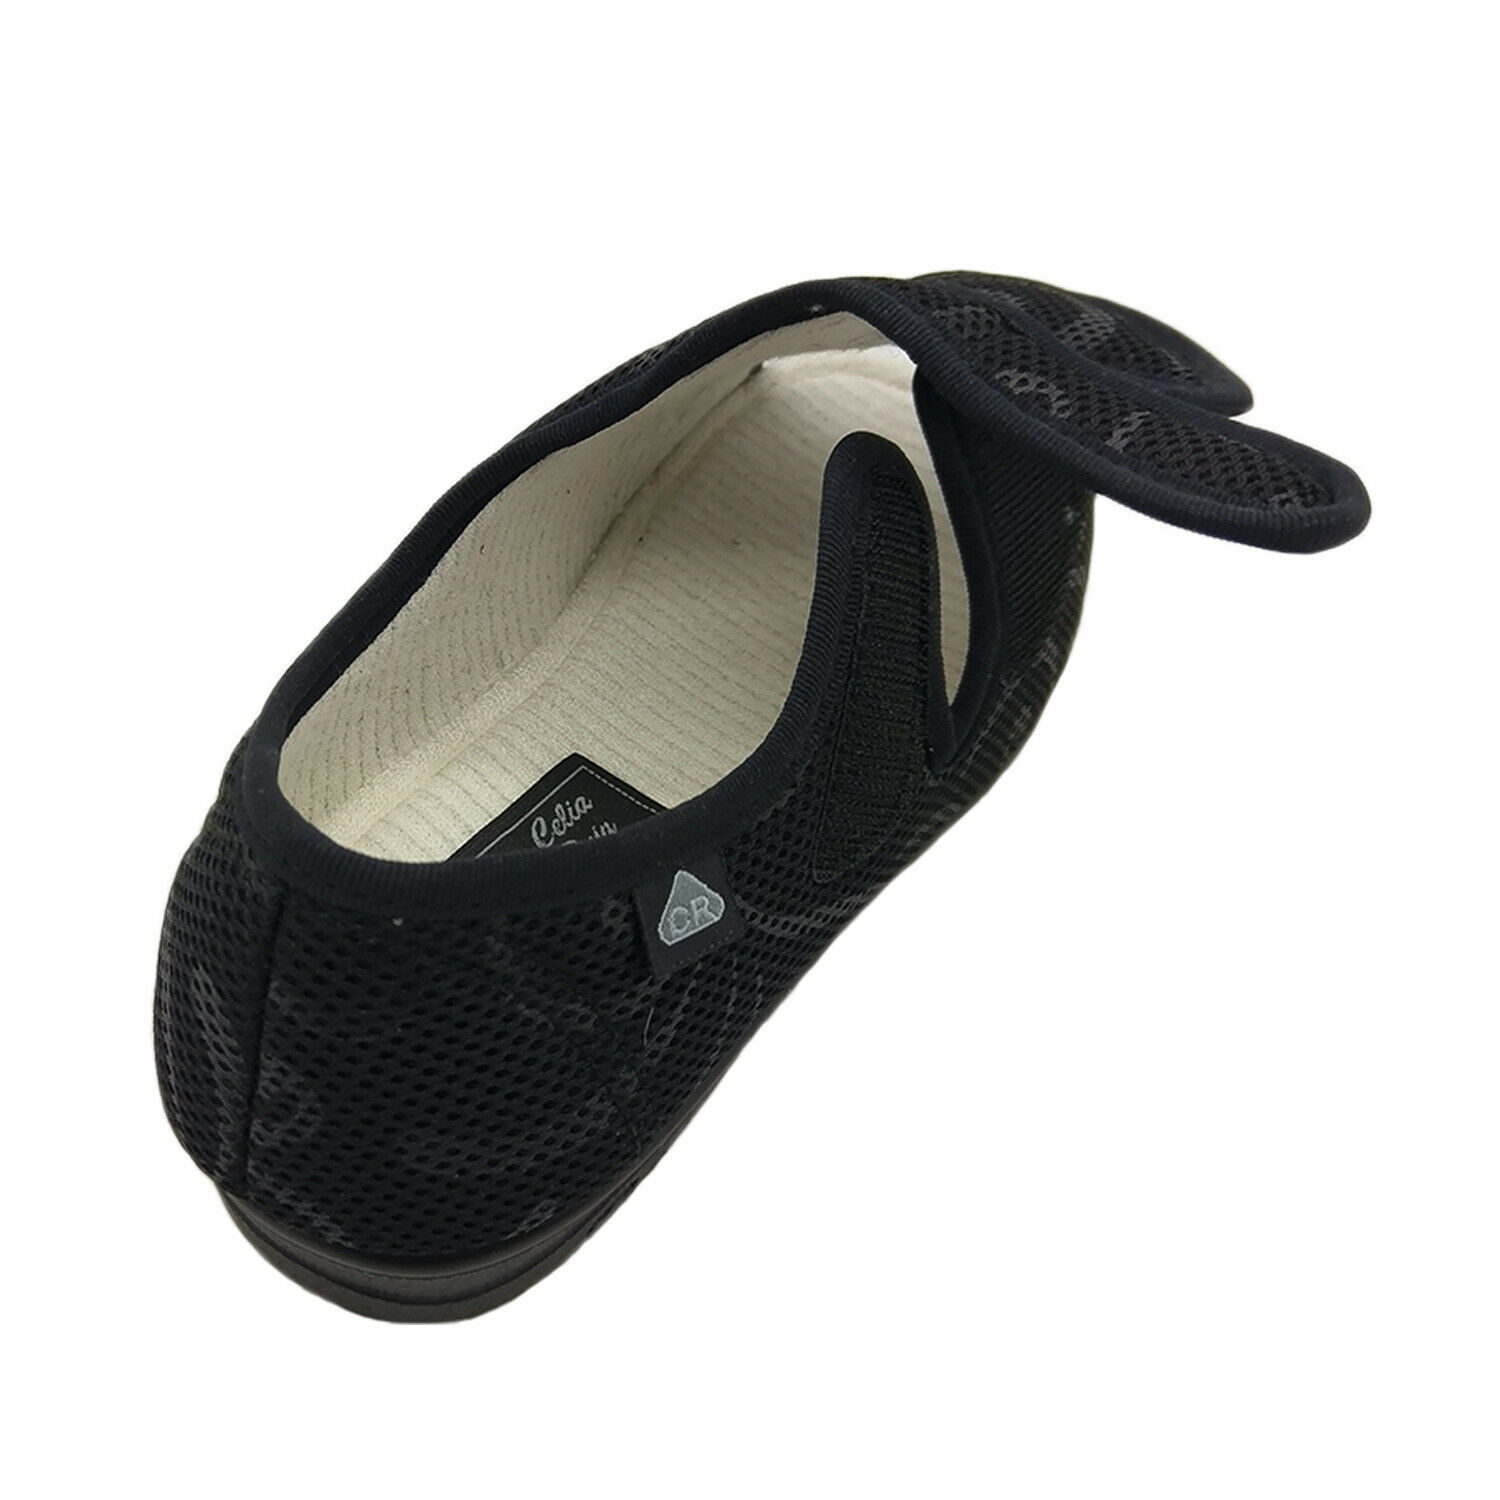 Ladies Slippers Celia Ruiz Bilby Bamboo Open Toe Adjustable Washable Wide  Fit | eBay